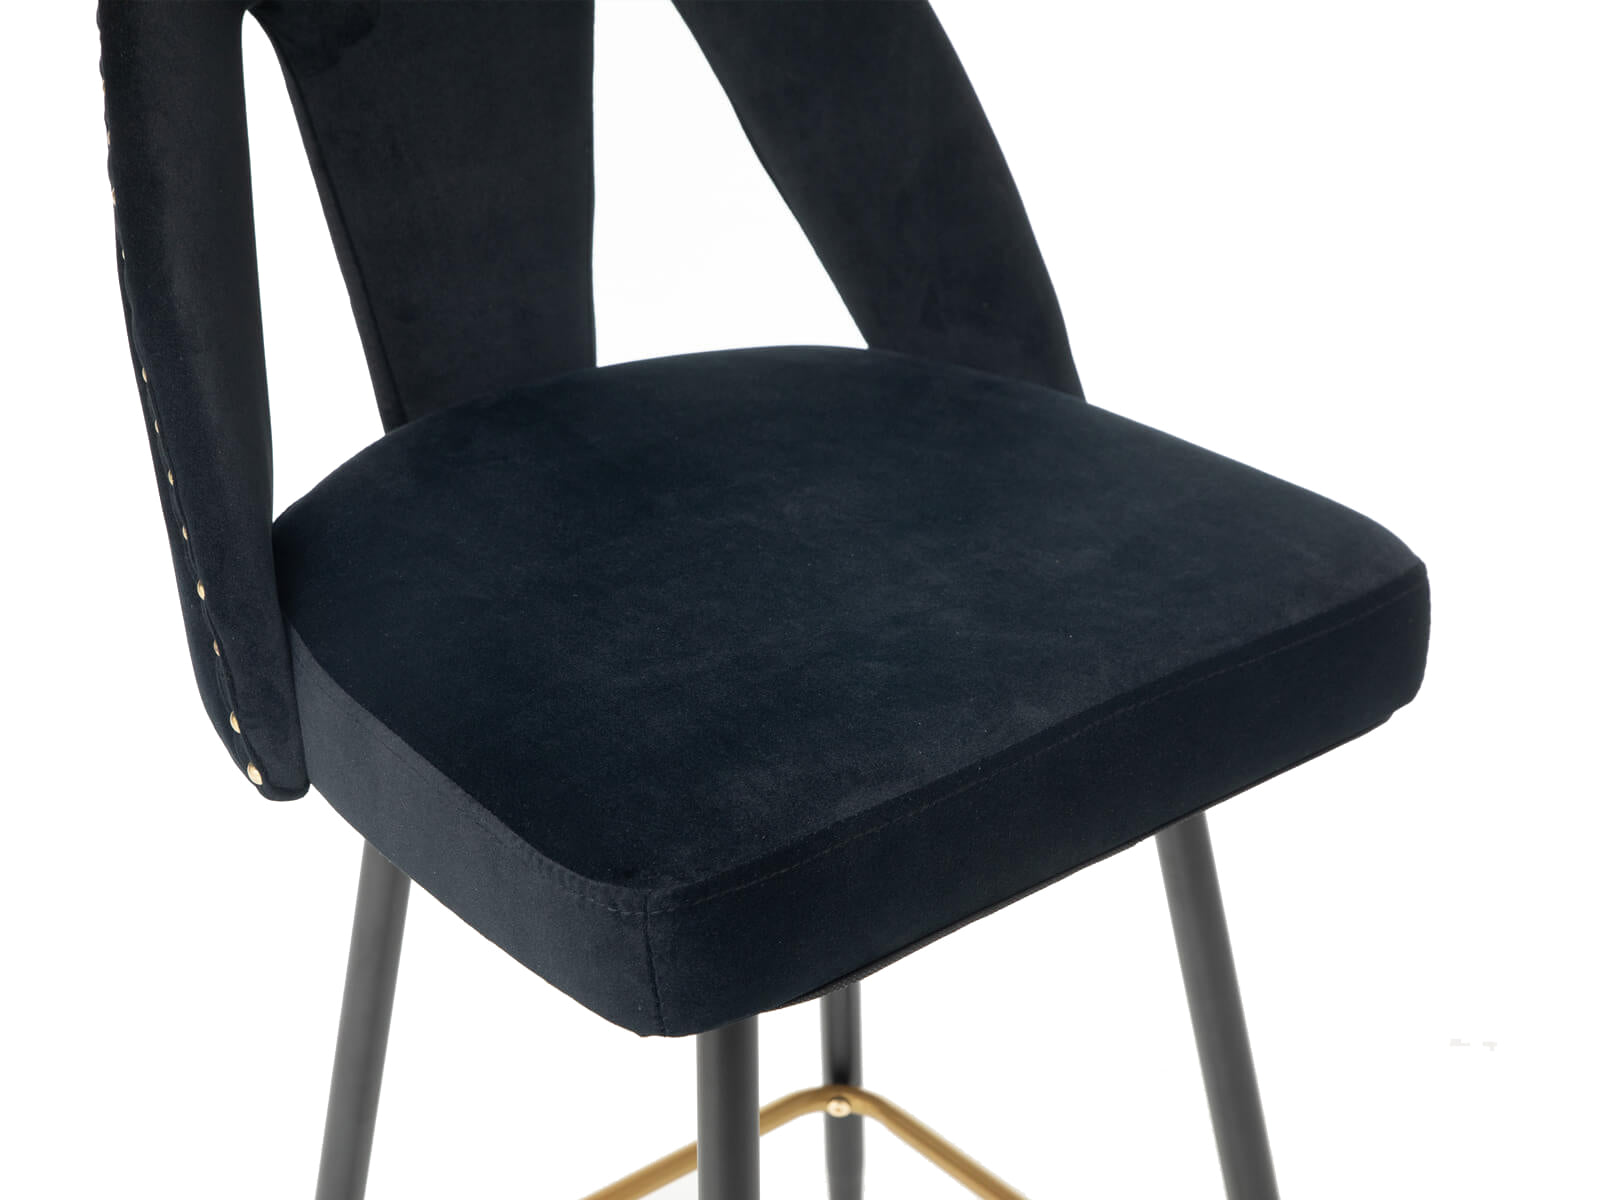 Heidi kitchen breakfast bar stools counter height chairs velvet with backs | Lemroe